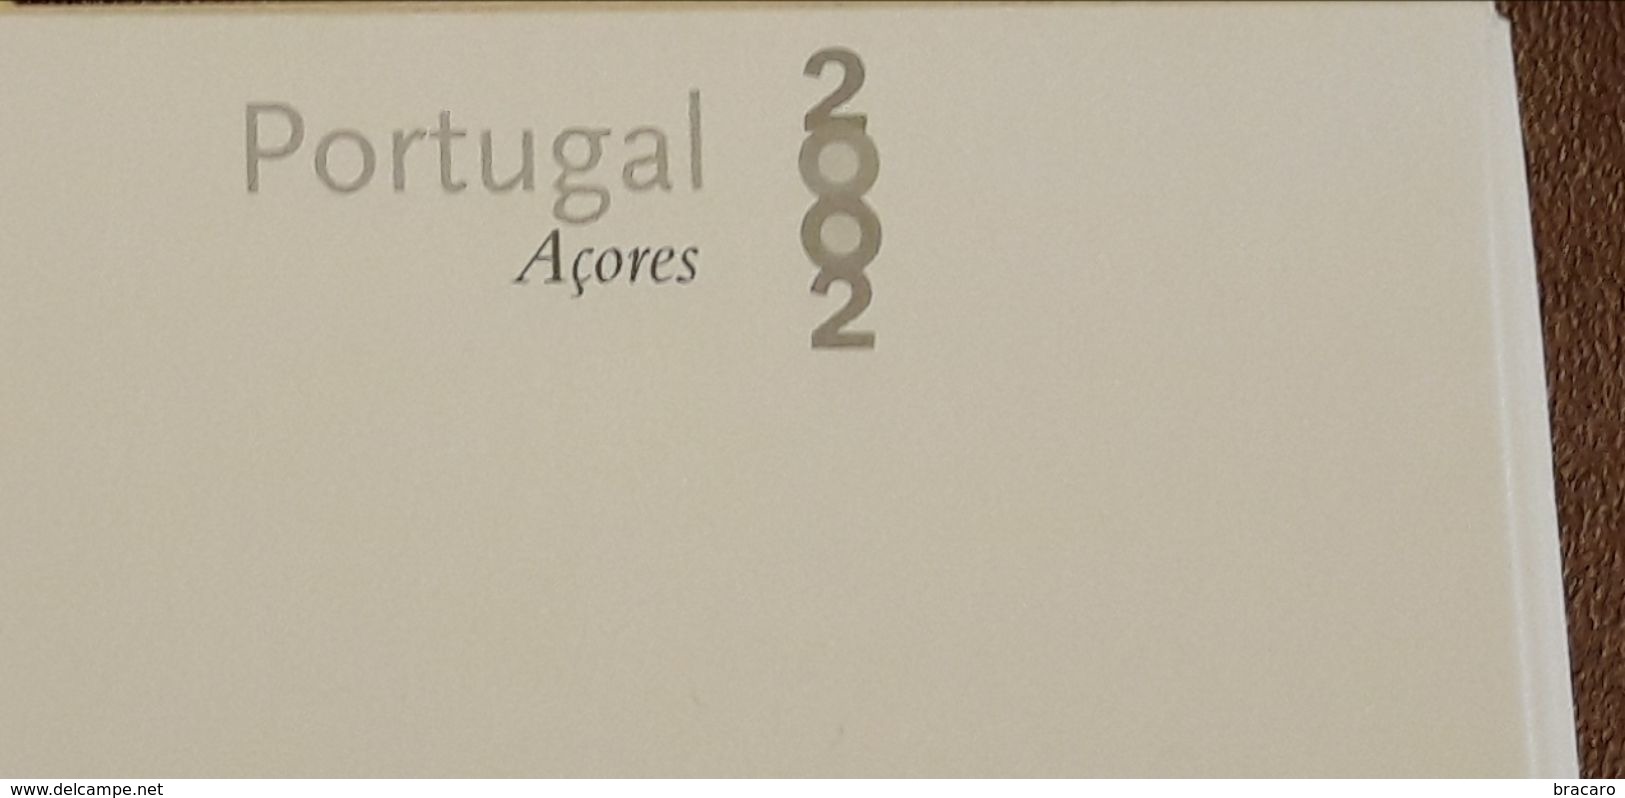 PORTUGAL - ÁLBUM FILATÉLICO - full year stamps + blocks + ATM / machine stamps + carnets + miniature sheets - MNH - 2001